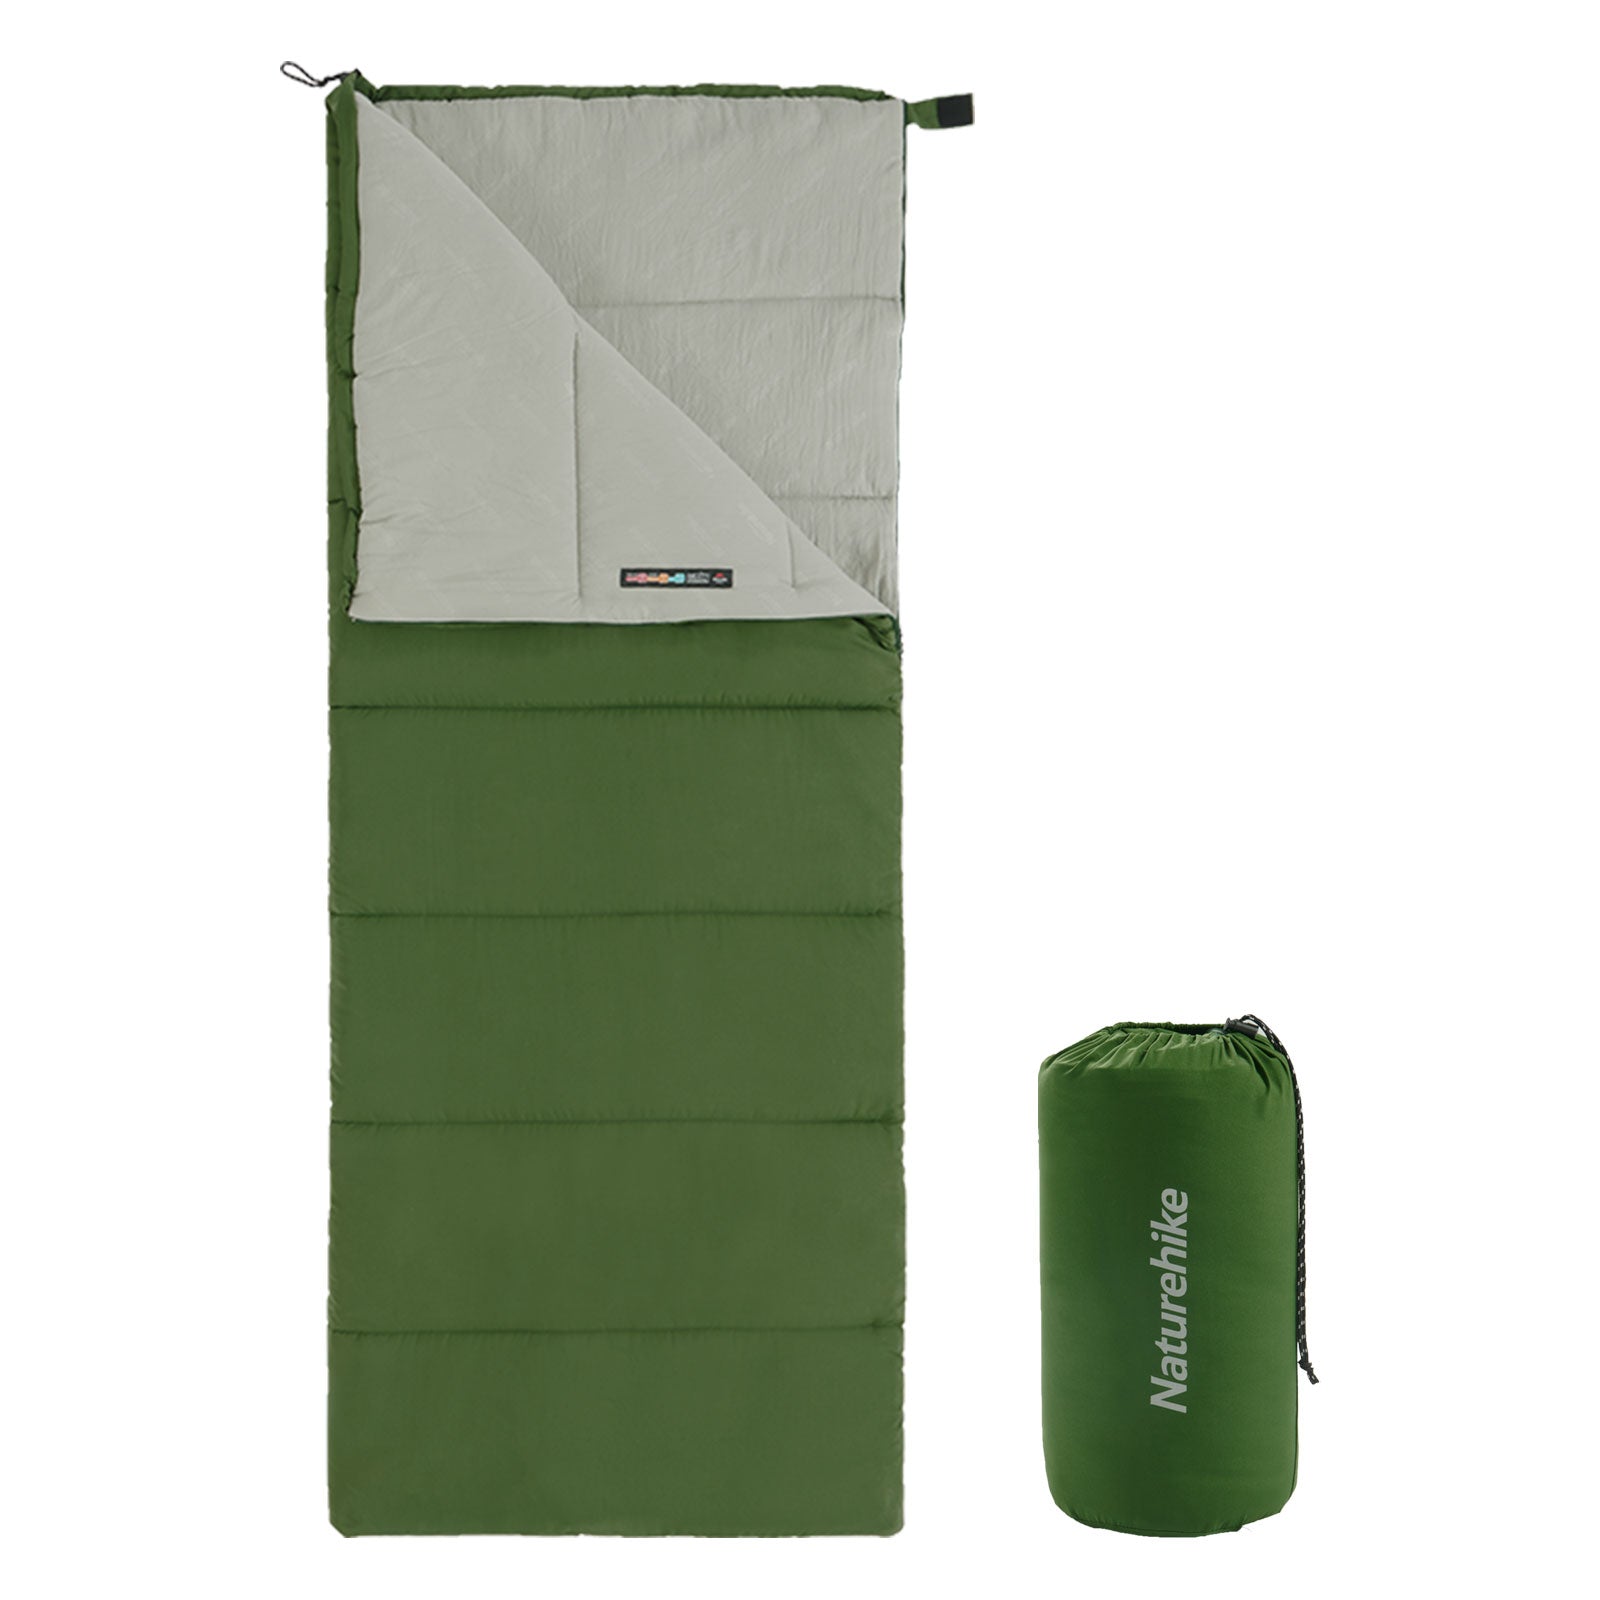 F150 升級版 Envelope式棉質睡袋 - 綠色/藍色/灰色